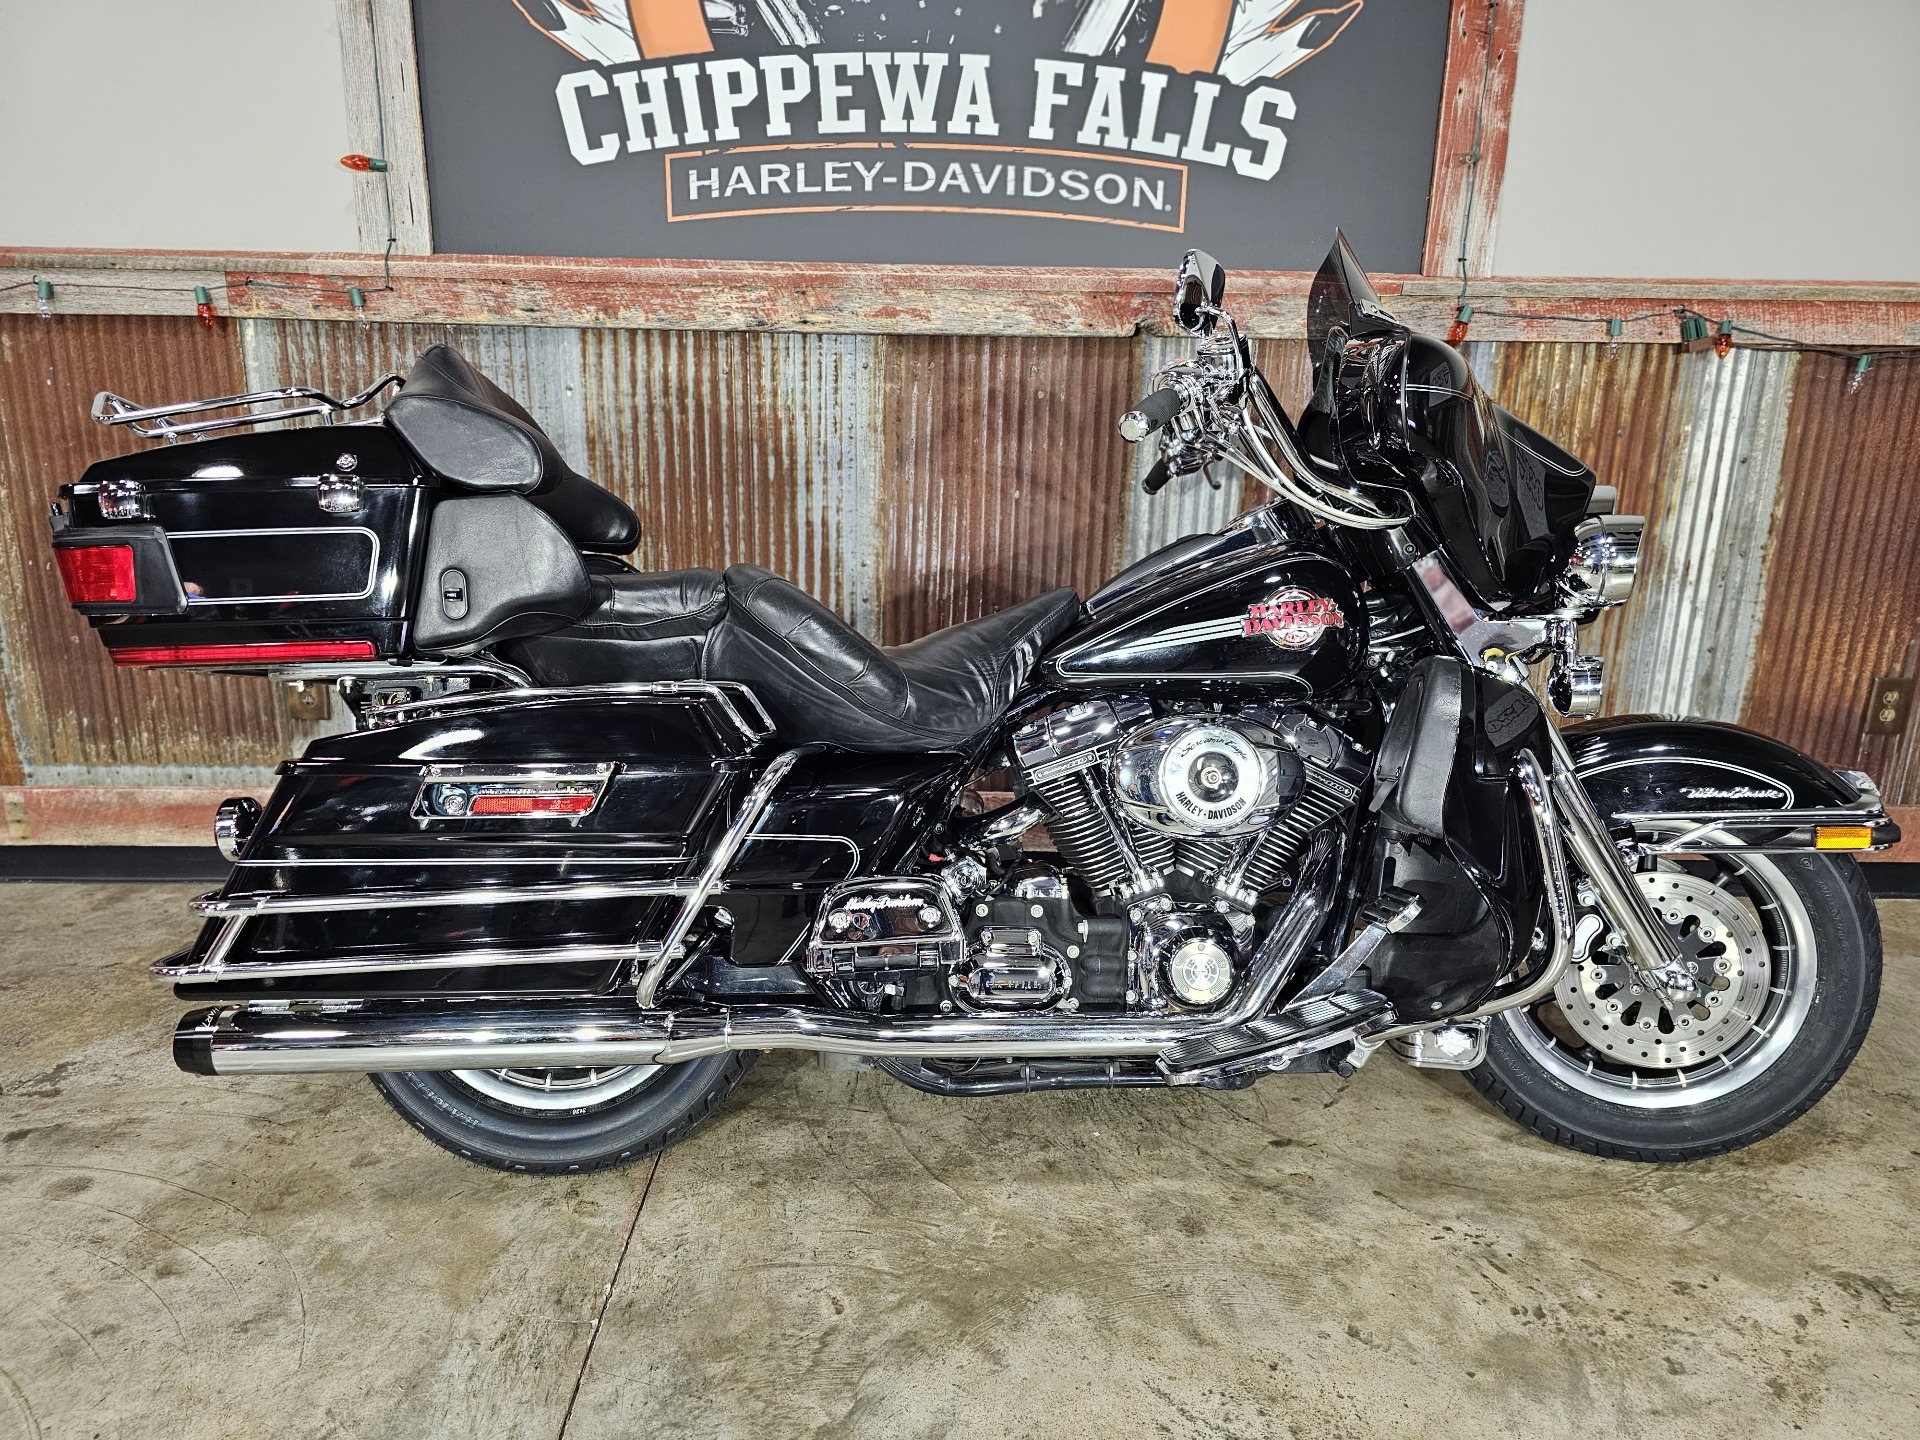 2007 Harley-Davidson FLHTCU Ultra Classic® Electra Glide® Patriot Special Edition in Chippewa Falls, Wisconsin - Photo 1